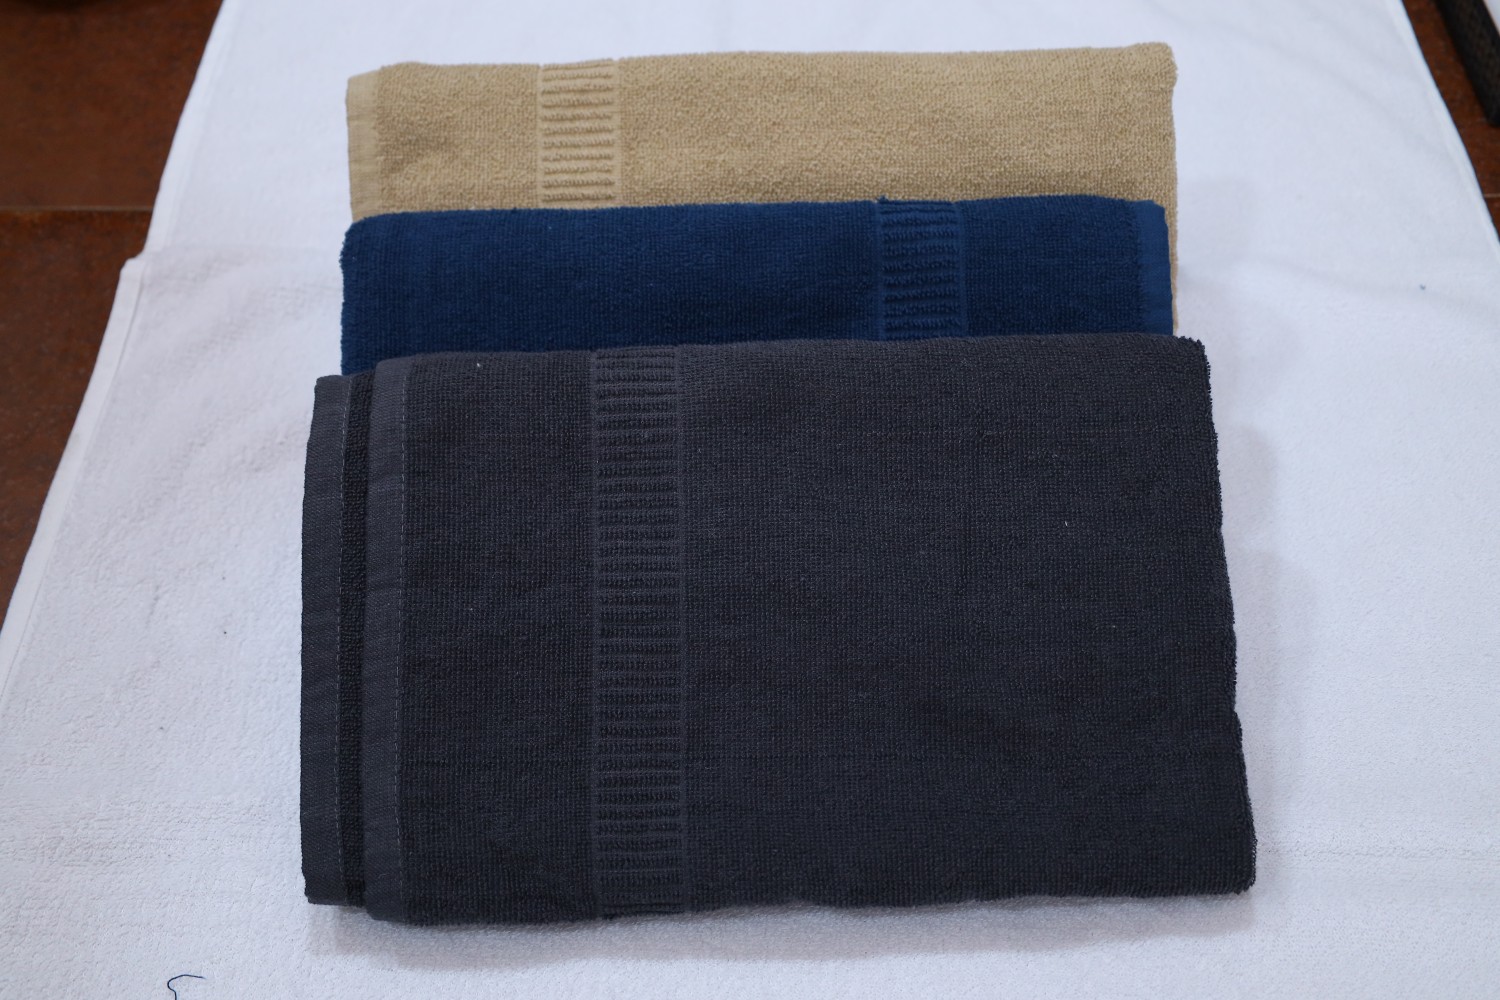 Taurusent Super Soft 100% Cotton High Absorbing Turkey Bath Towel, Size: 30x60 inches (450 GSM) - Pack of 3 (Beige-Grey-Blue)